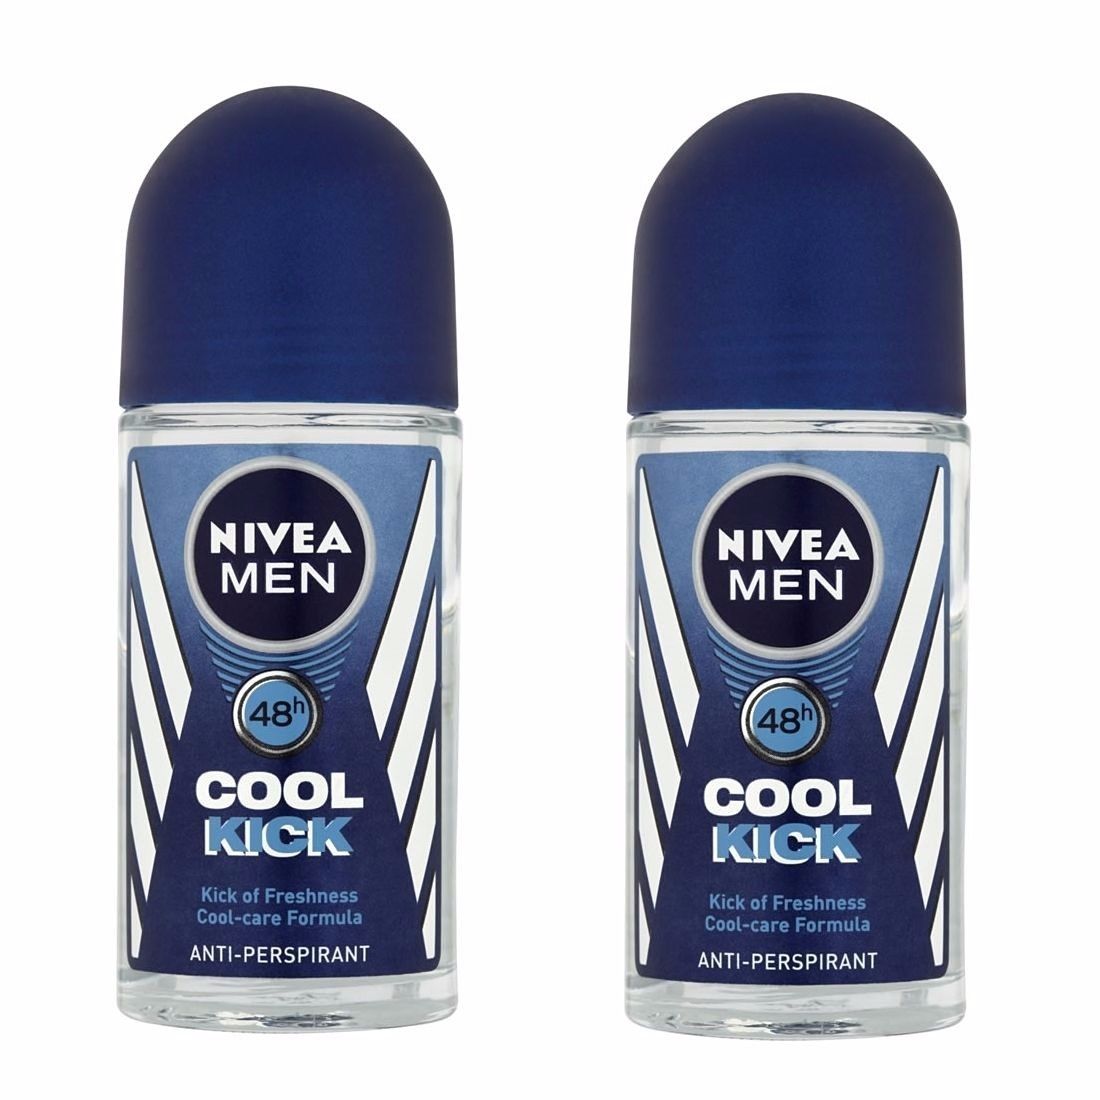 Nivea Cool Kick (Pack of 2) Anti-perspirant Deodorant Roll-On, 1.7 Fluid Ounce